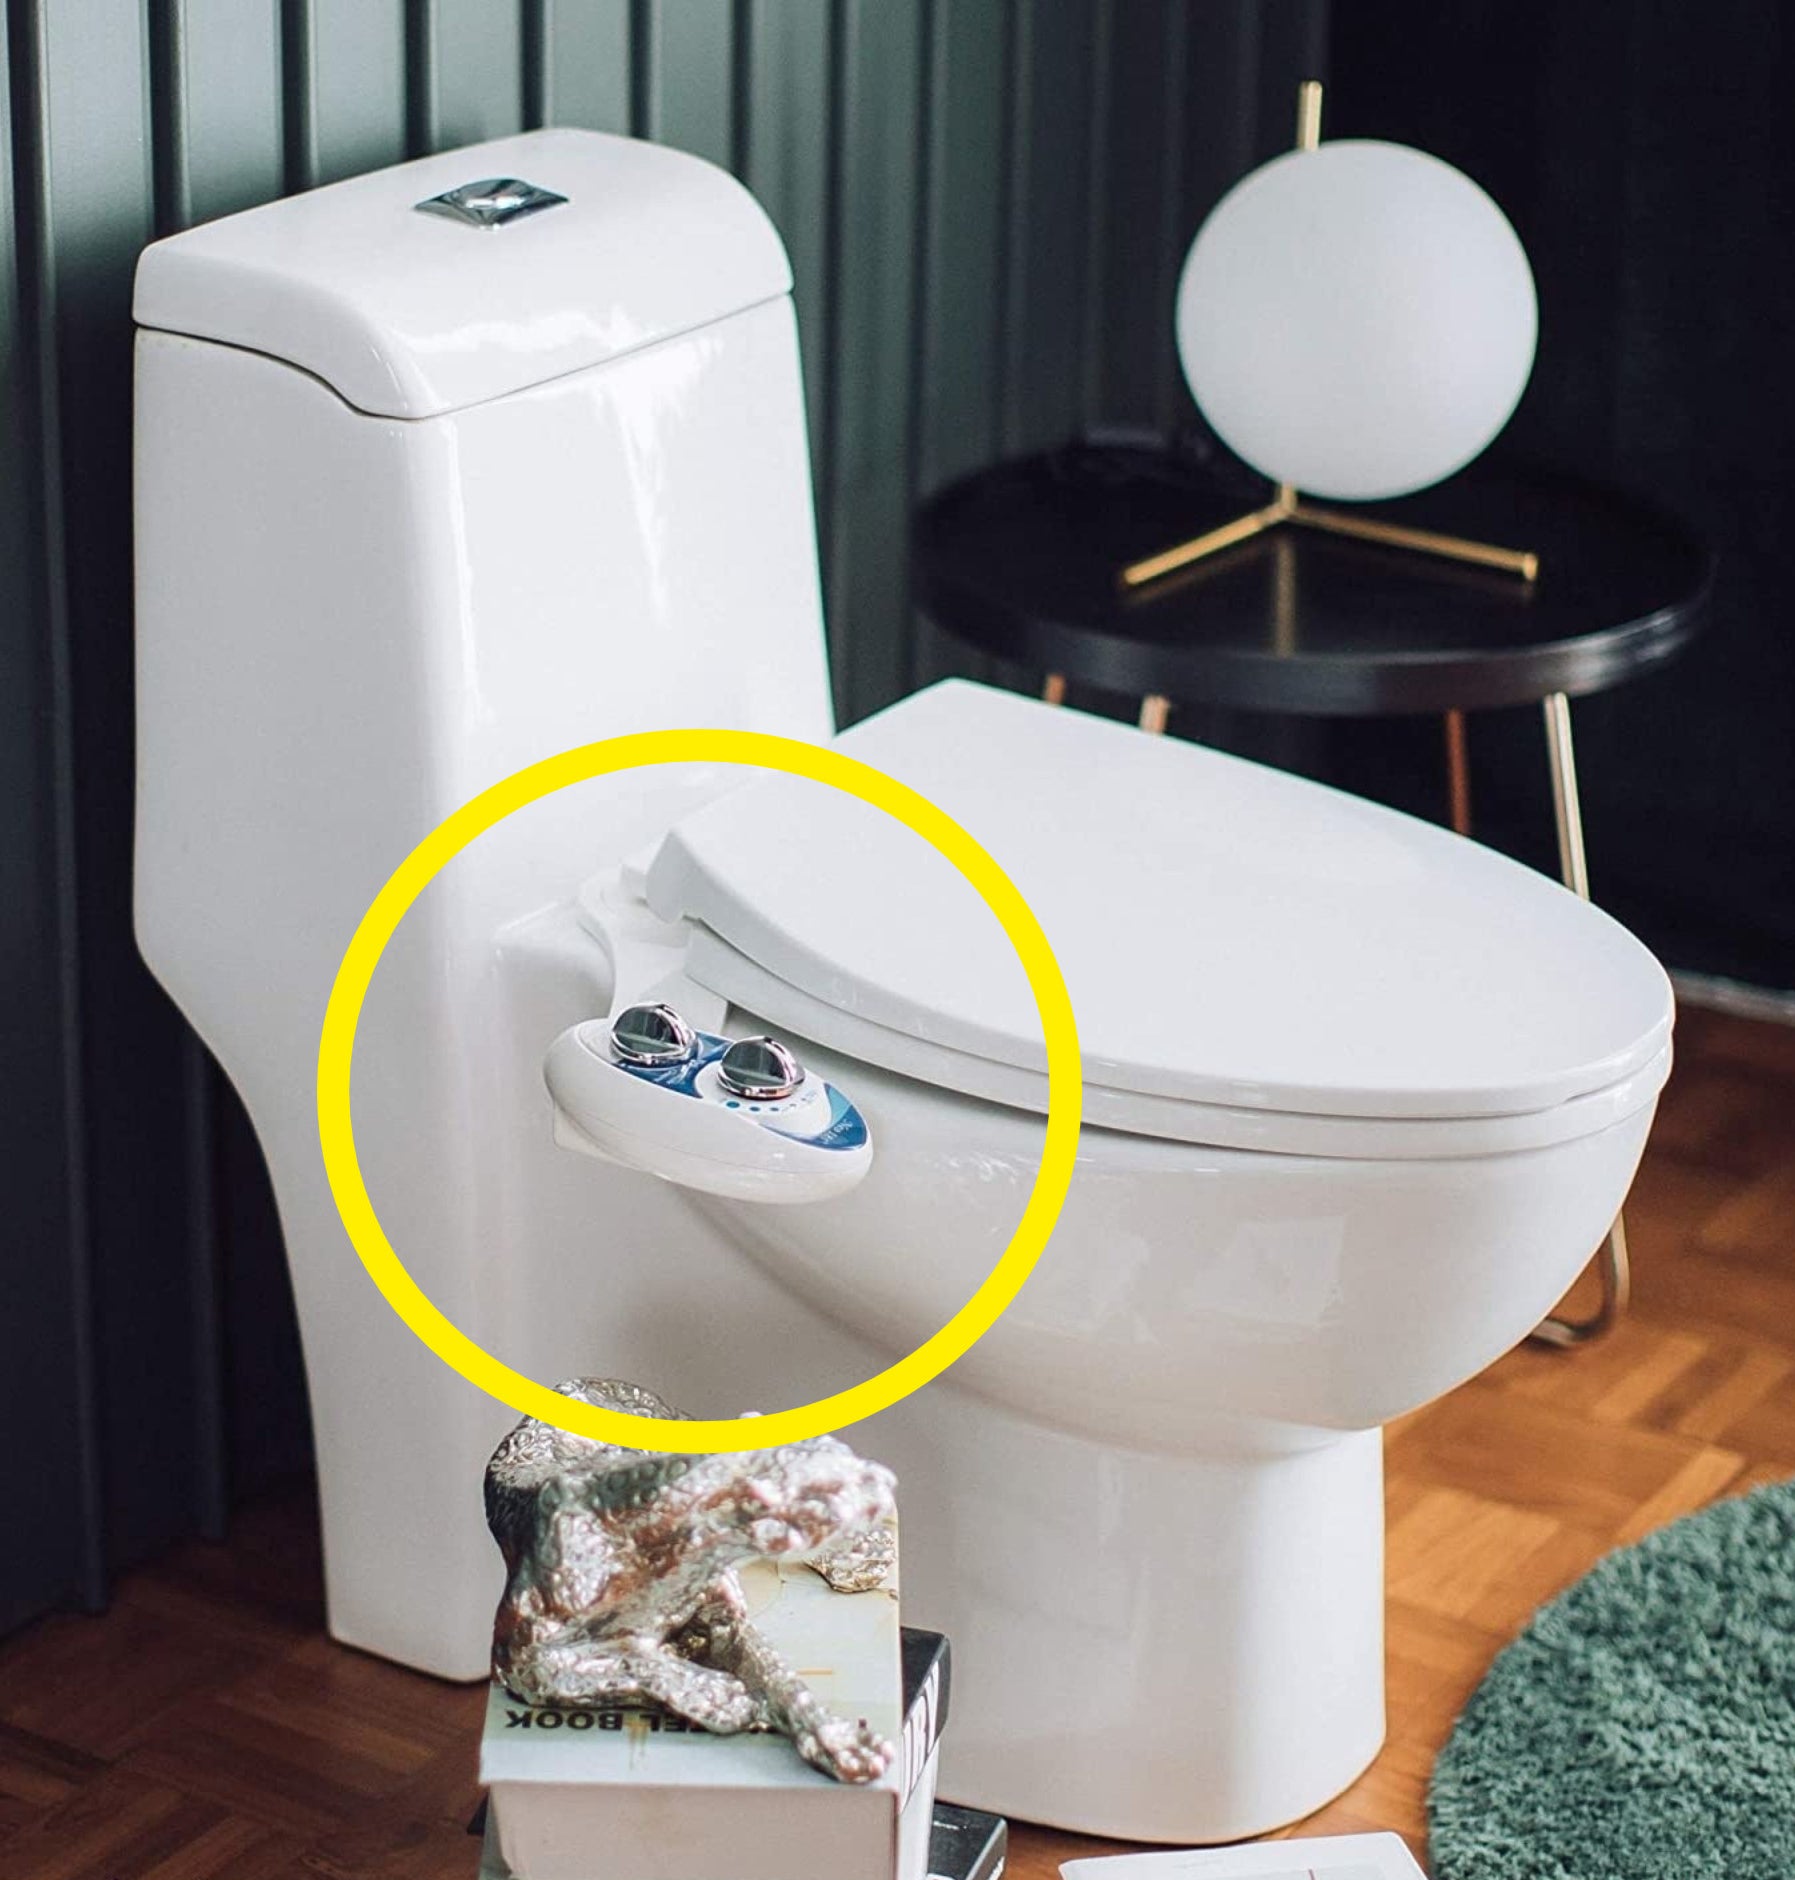 The bidet attachement on a toilet